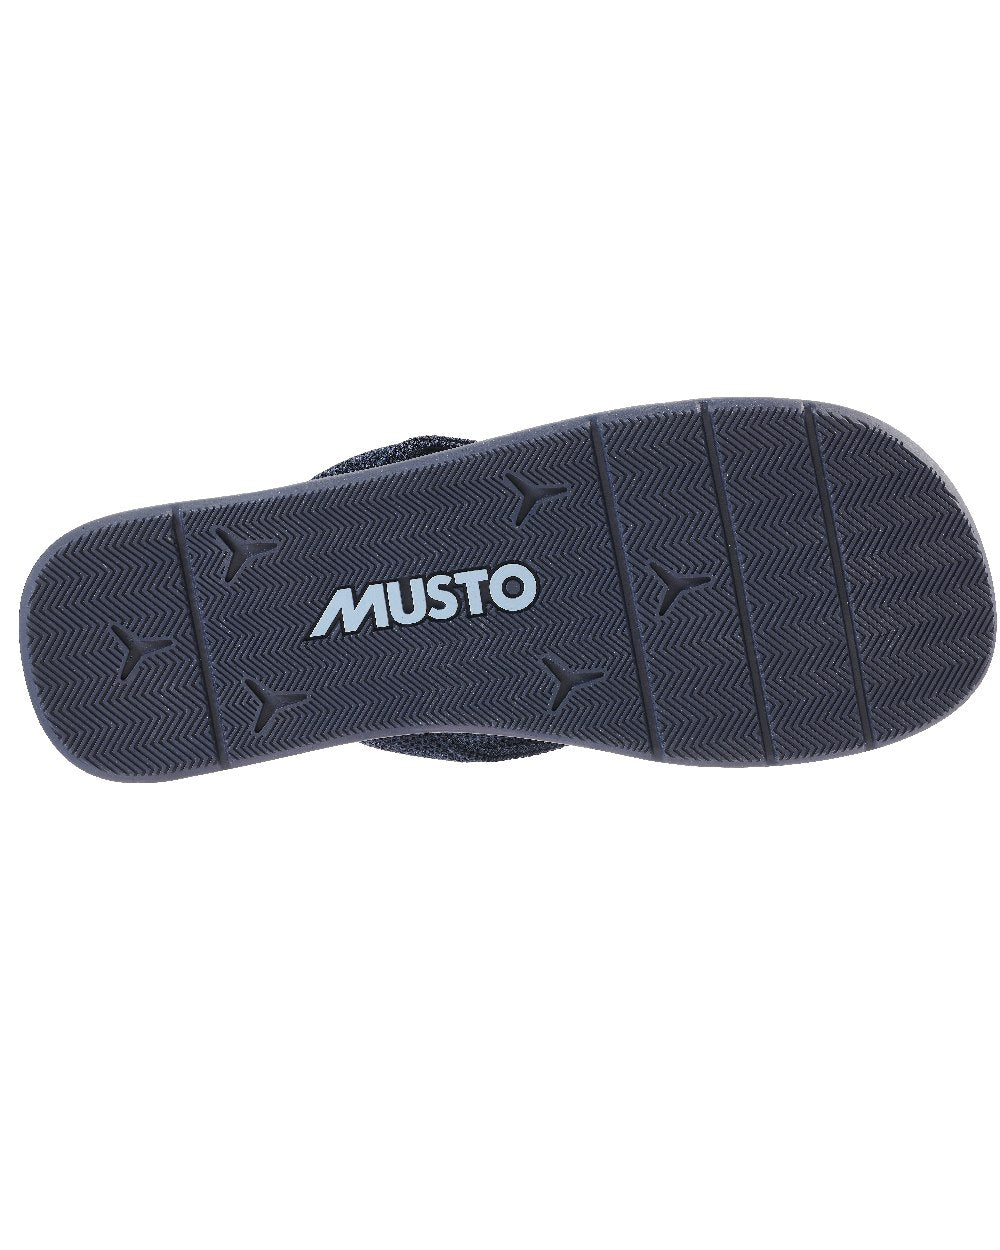 Musto Womens Nautic Sandals in True Navy Dusty Blue